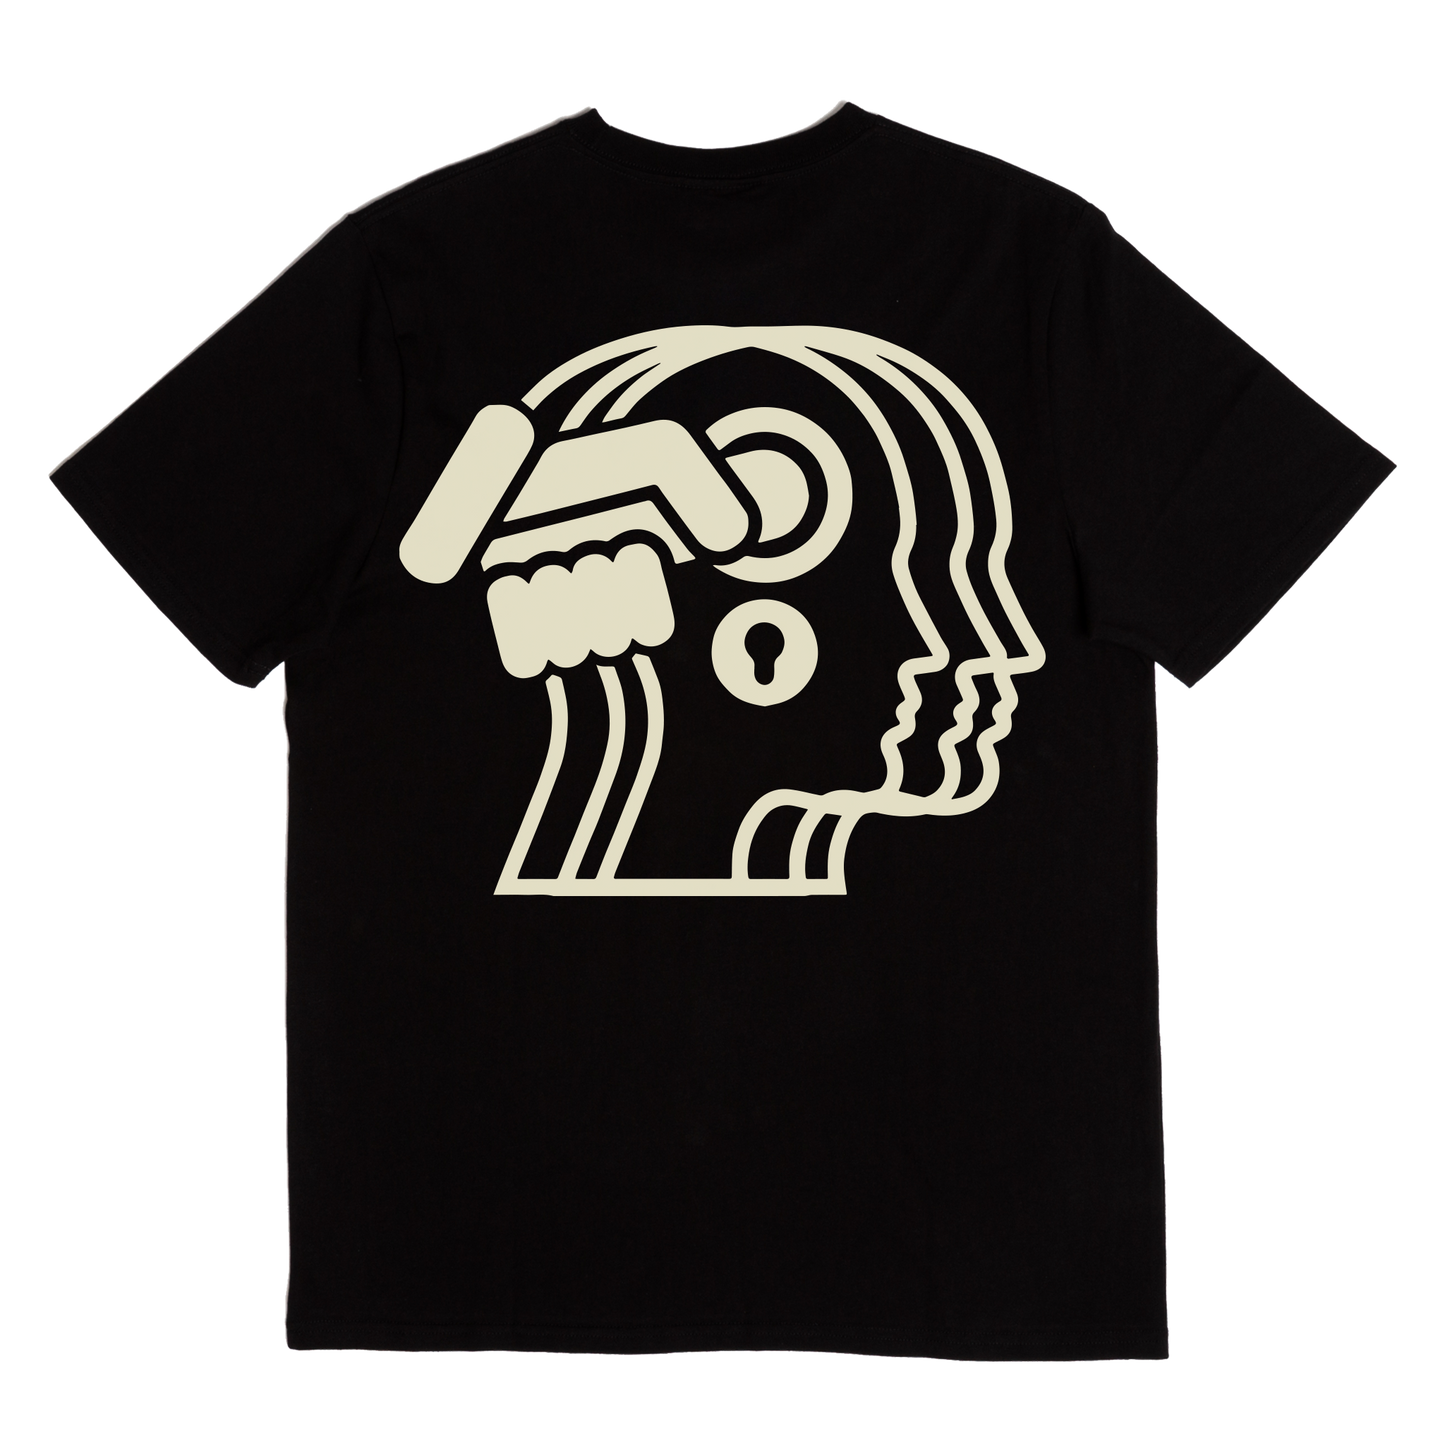 The Light T-Shirt (Black)